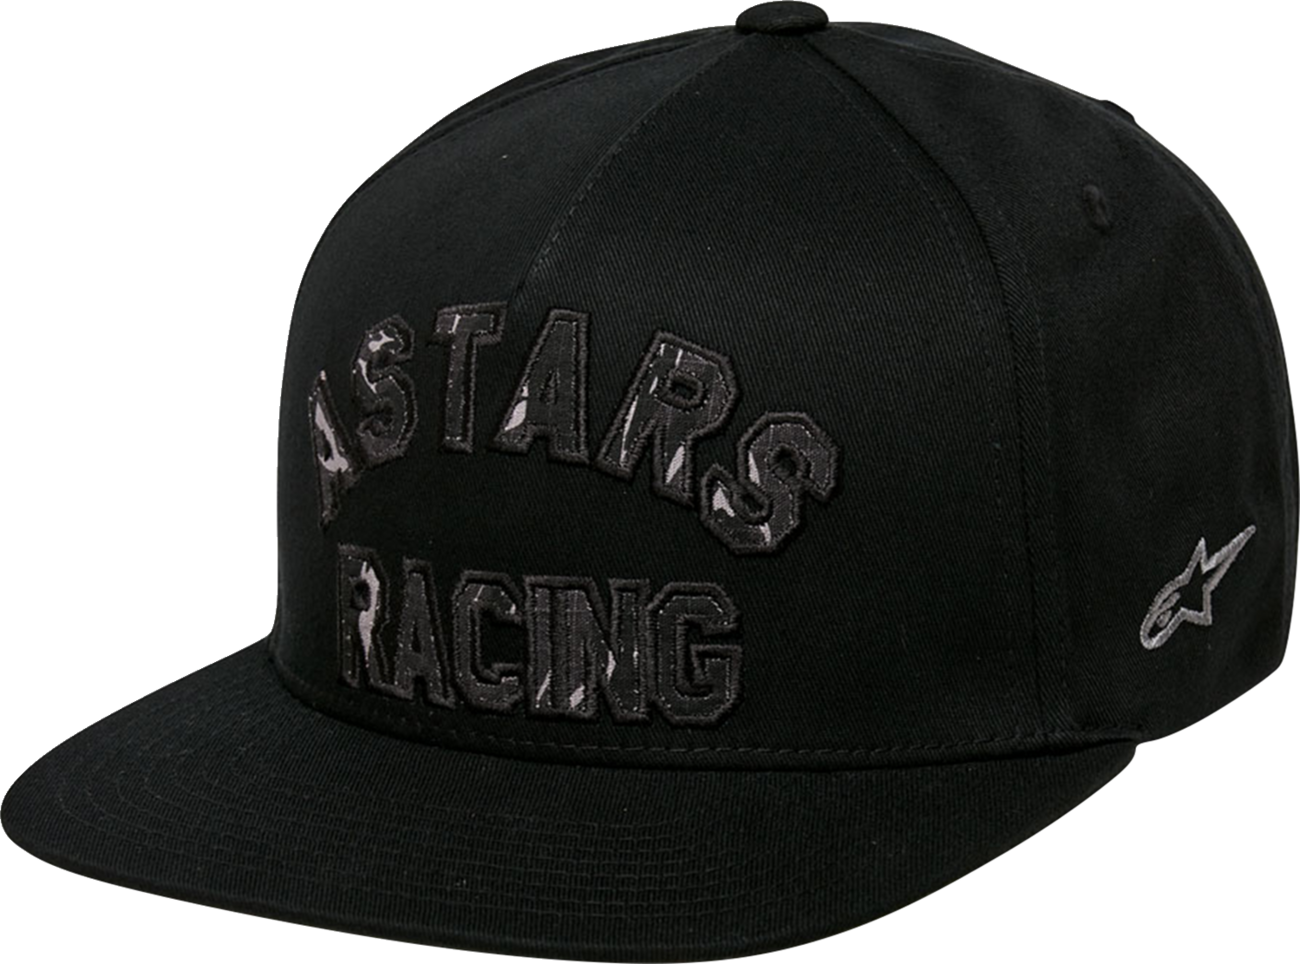 ALPINESTARS Assured Hat - Black - One Size 12338156010OS